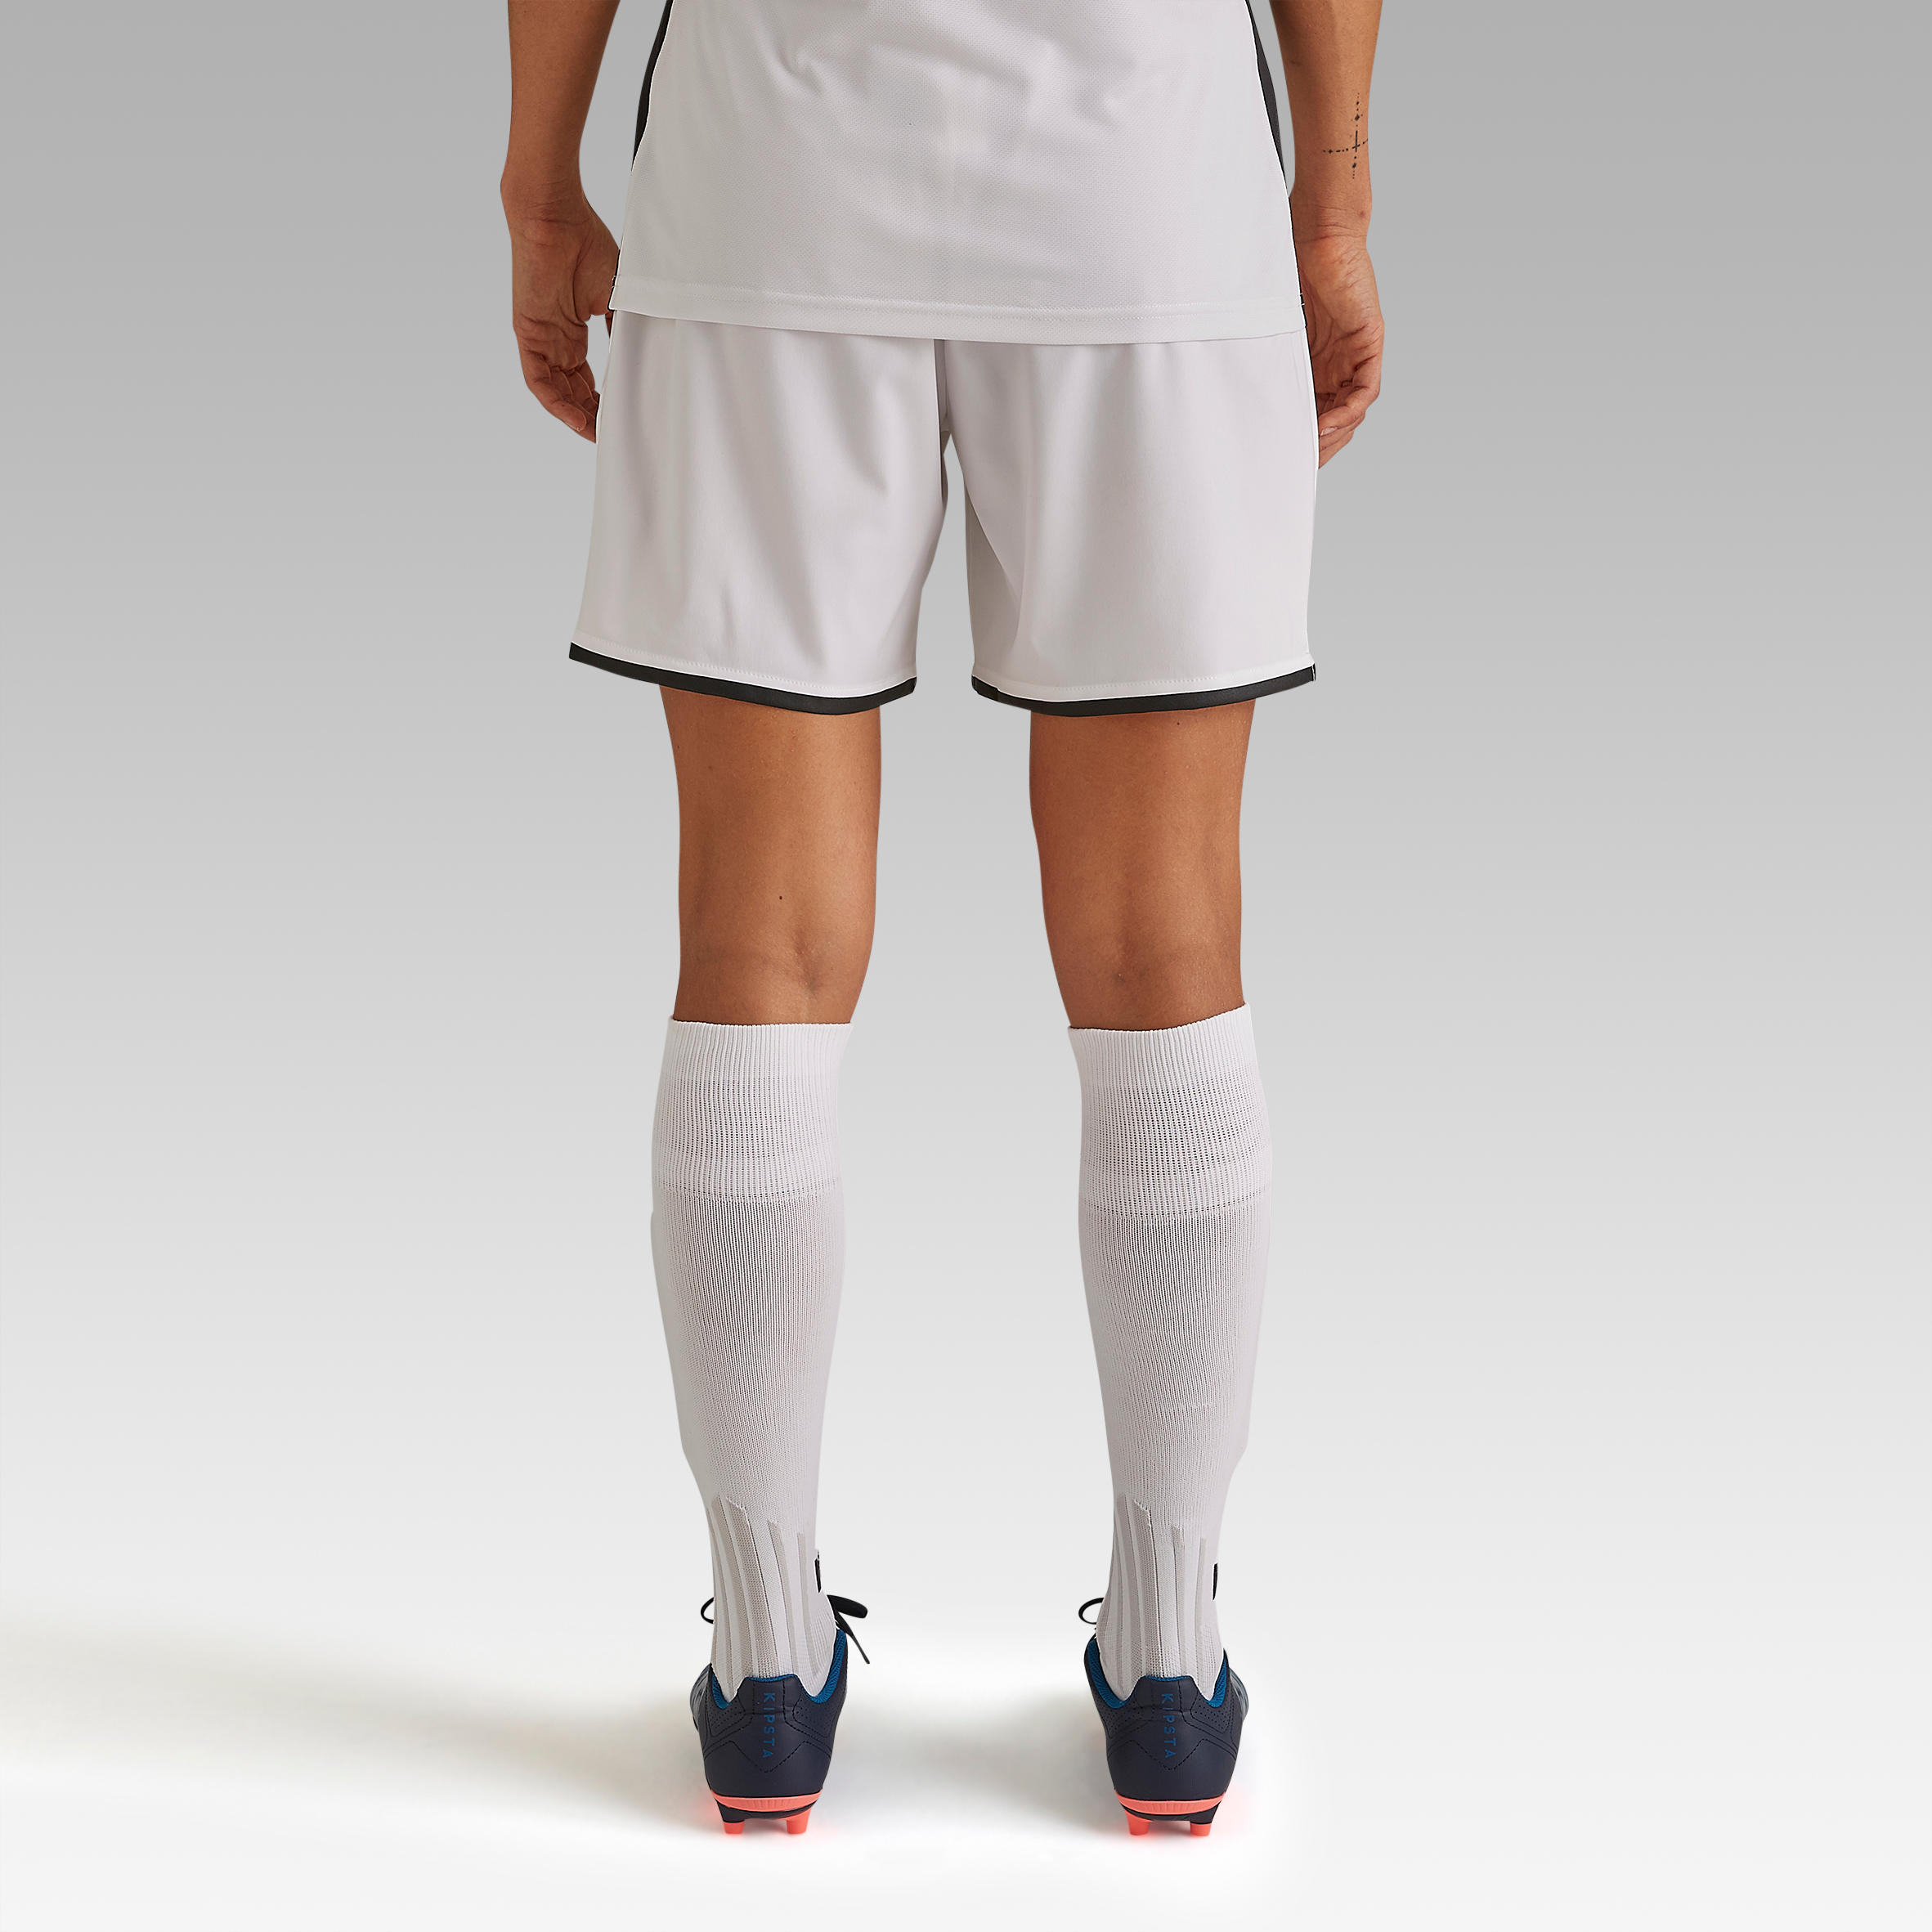 F500 Women's Football Shorts - White 4/9